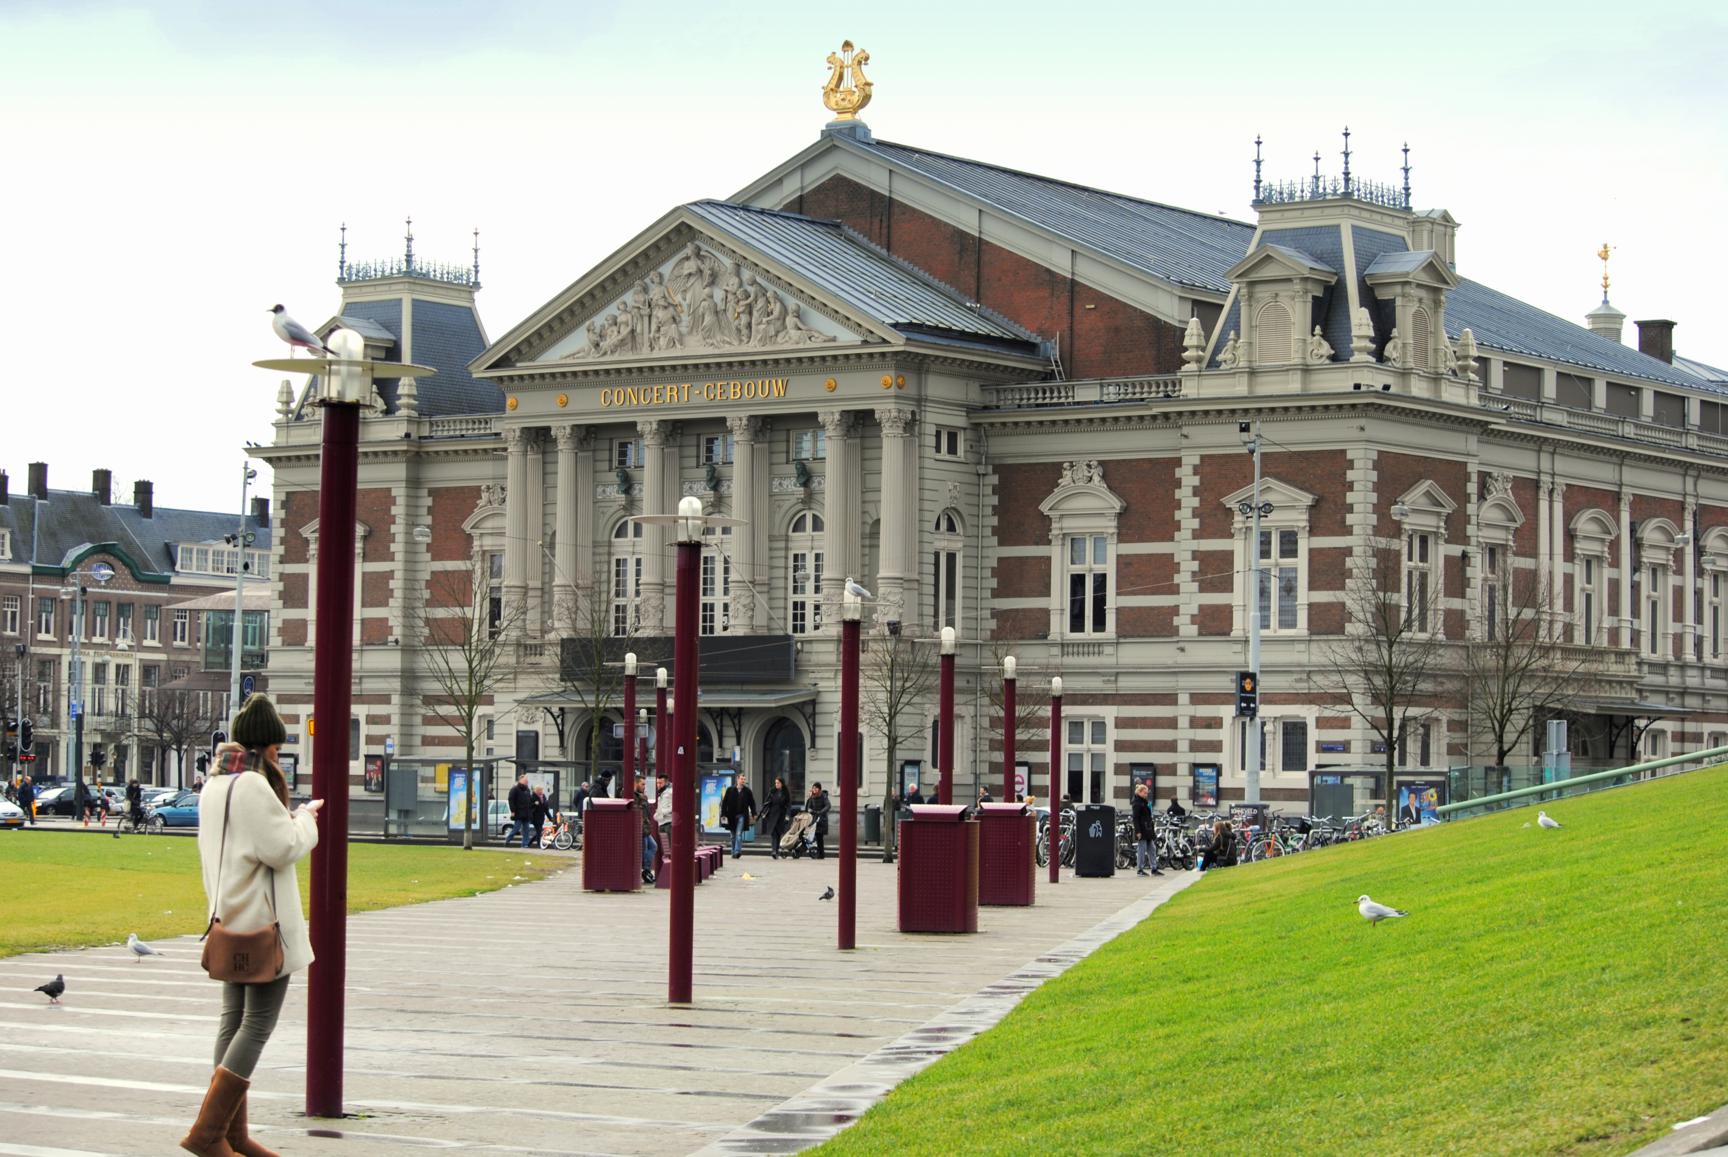 que-ver-amsterdam-concertgebouw-1